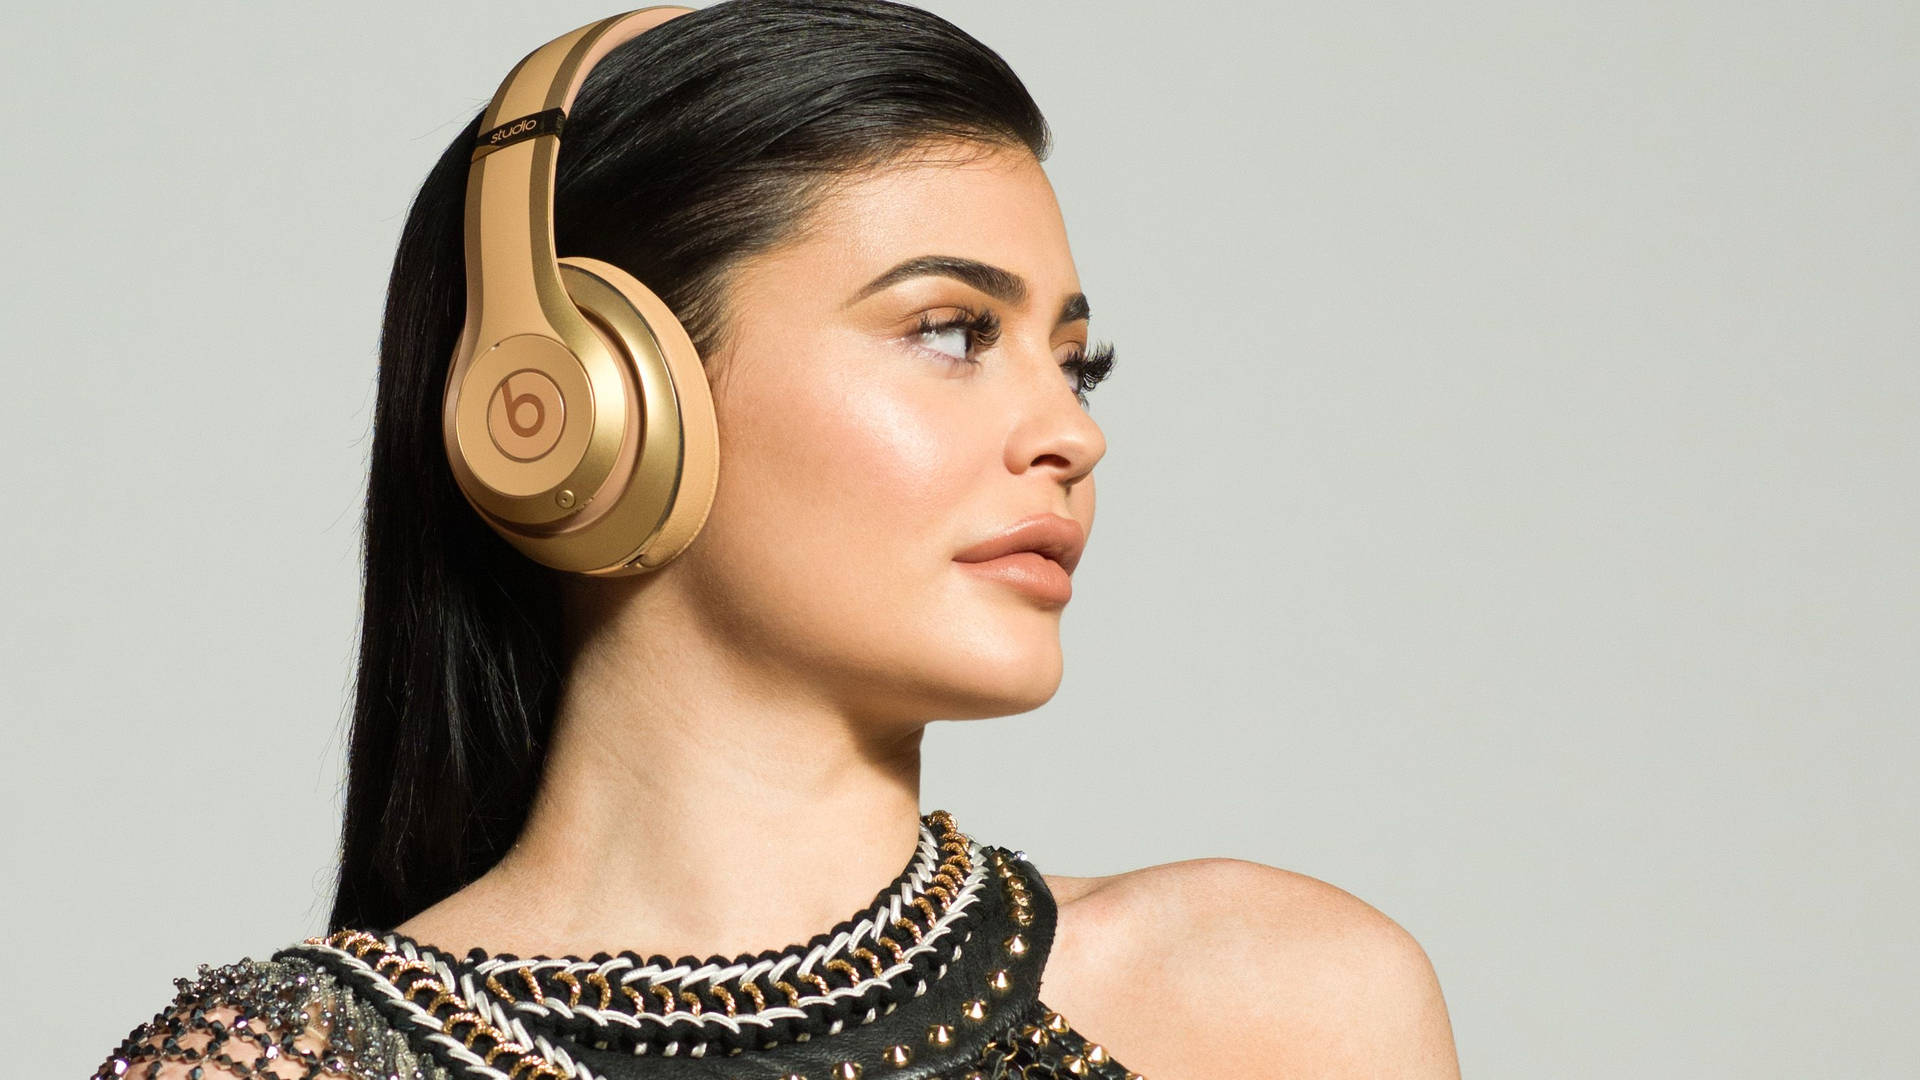 Kylie Jenner Wearing Beats Headphones Wallpaper